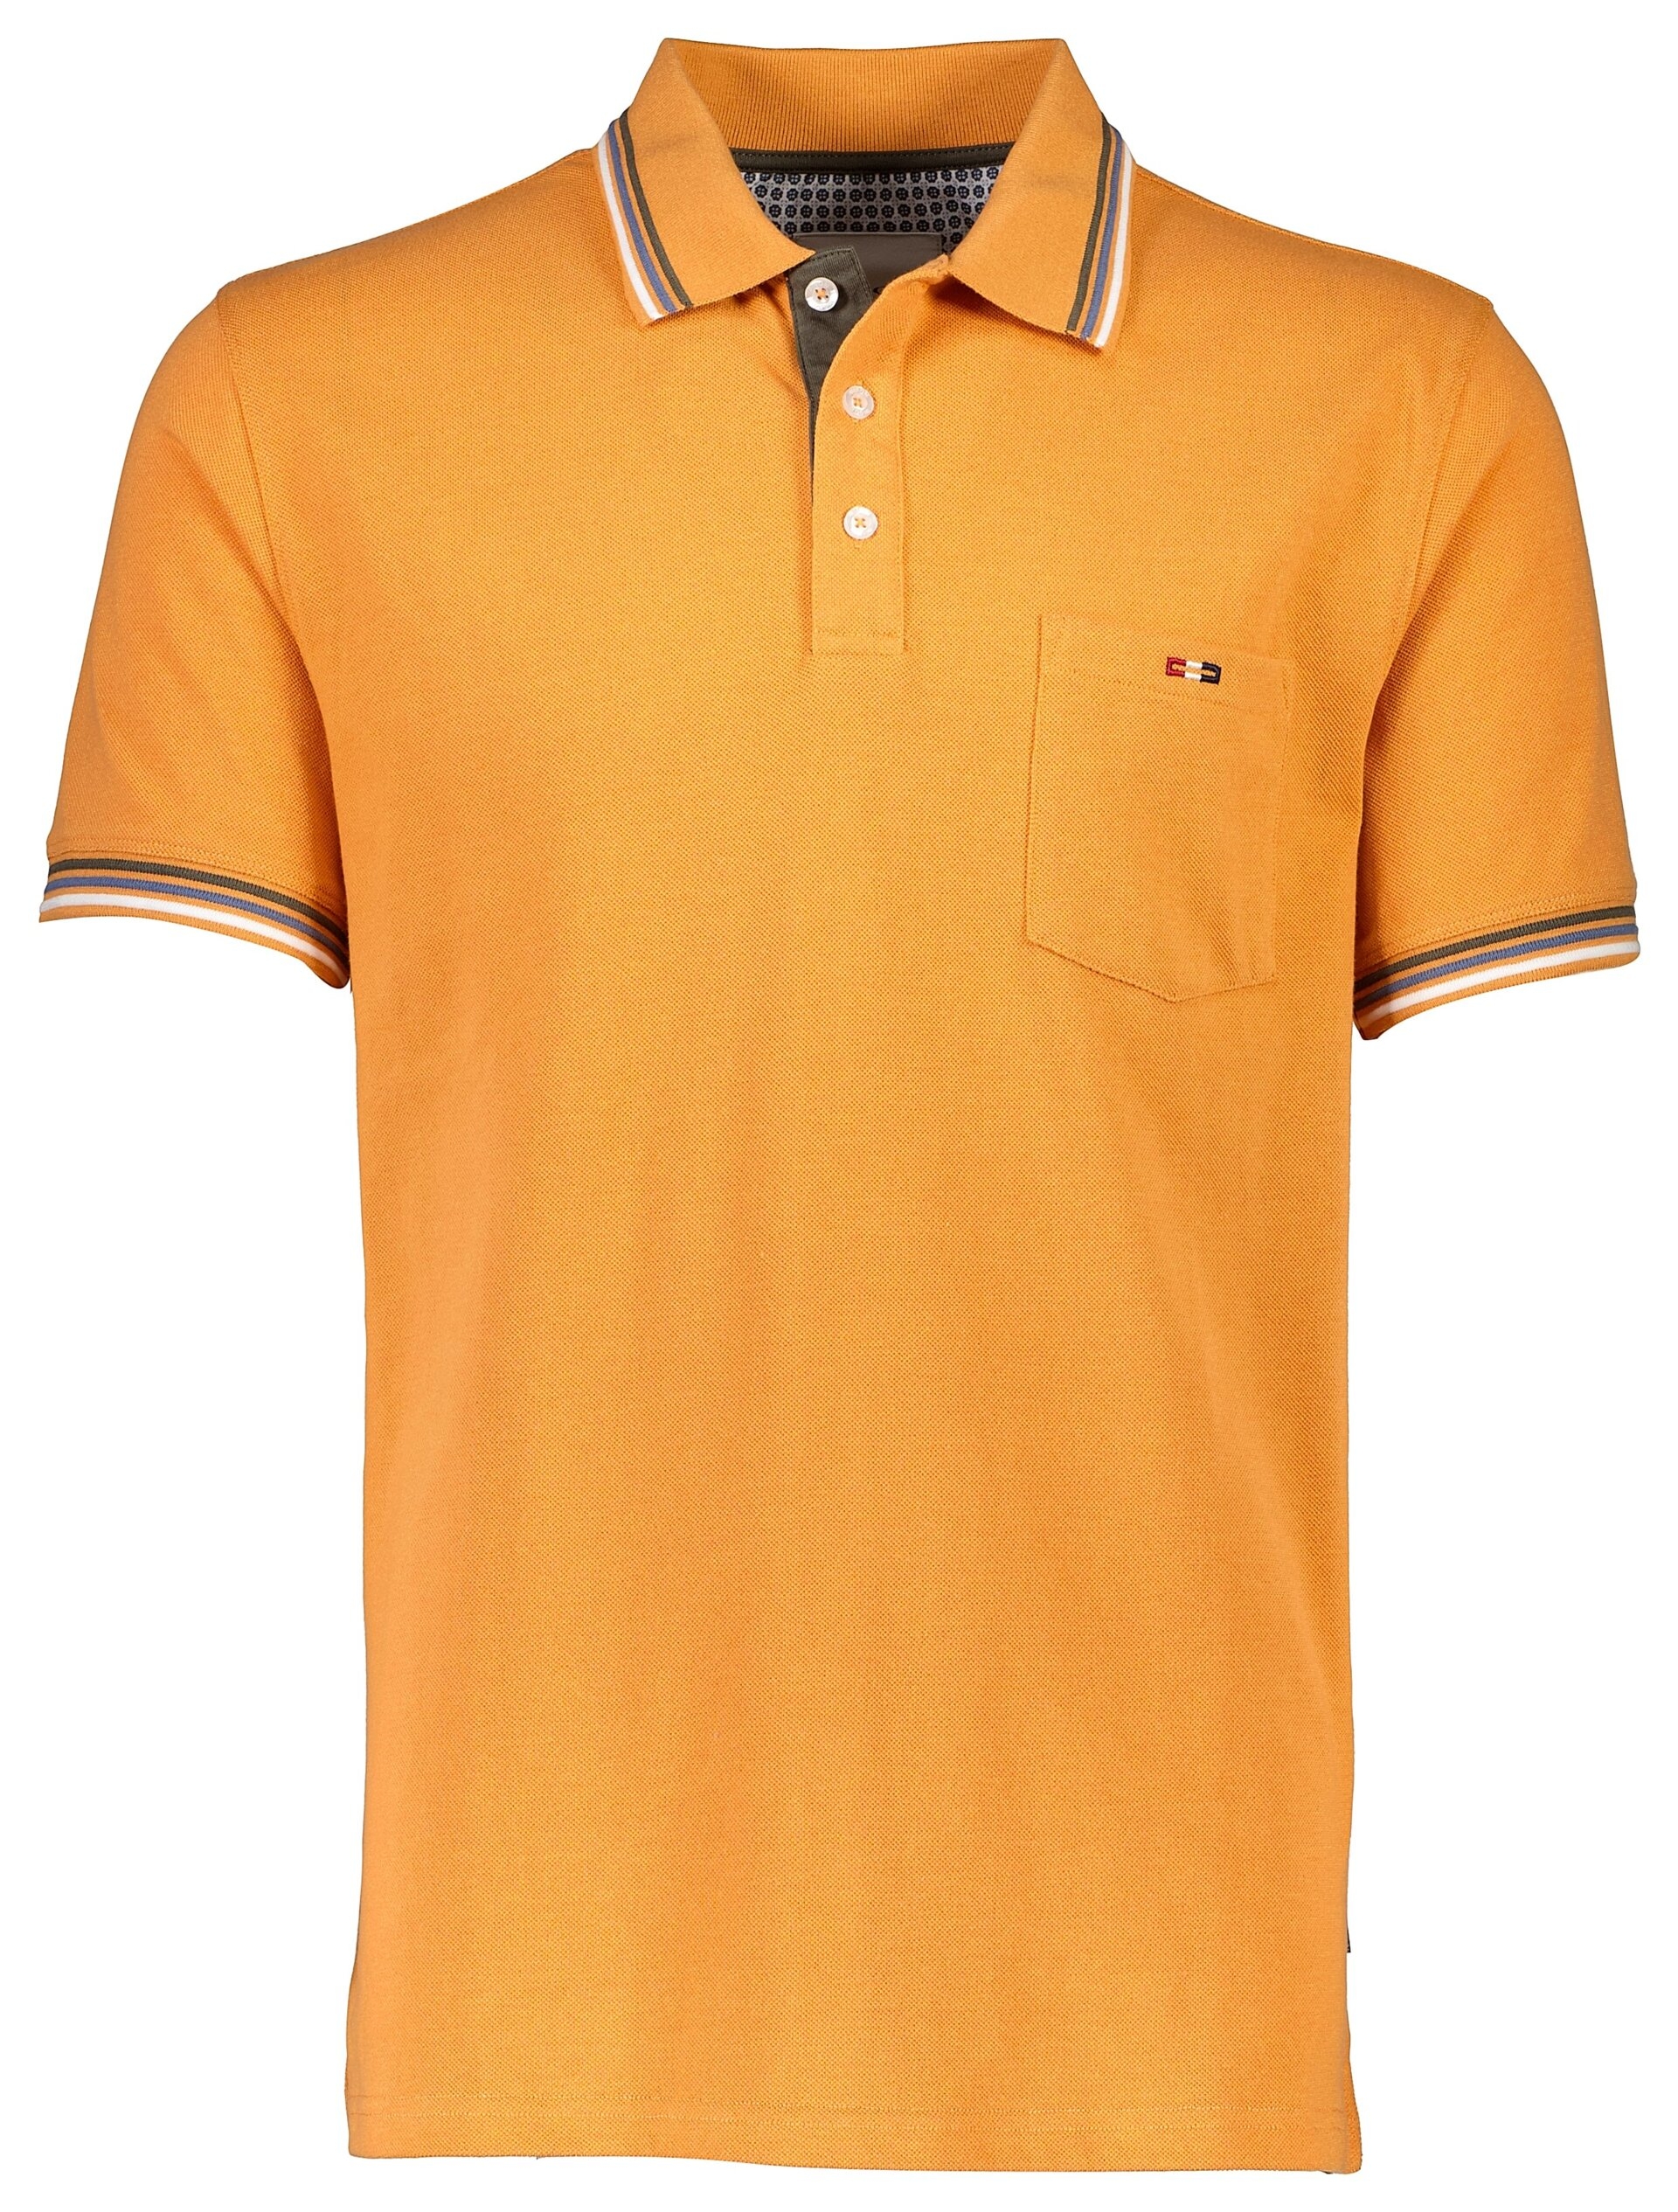 Bison Poloshirt gul / yellow 224